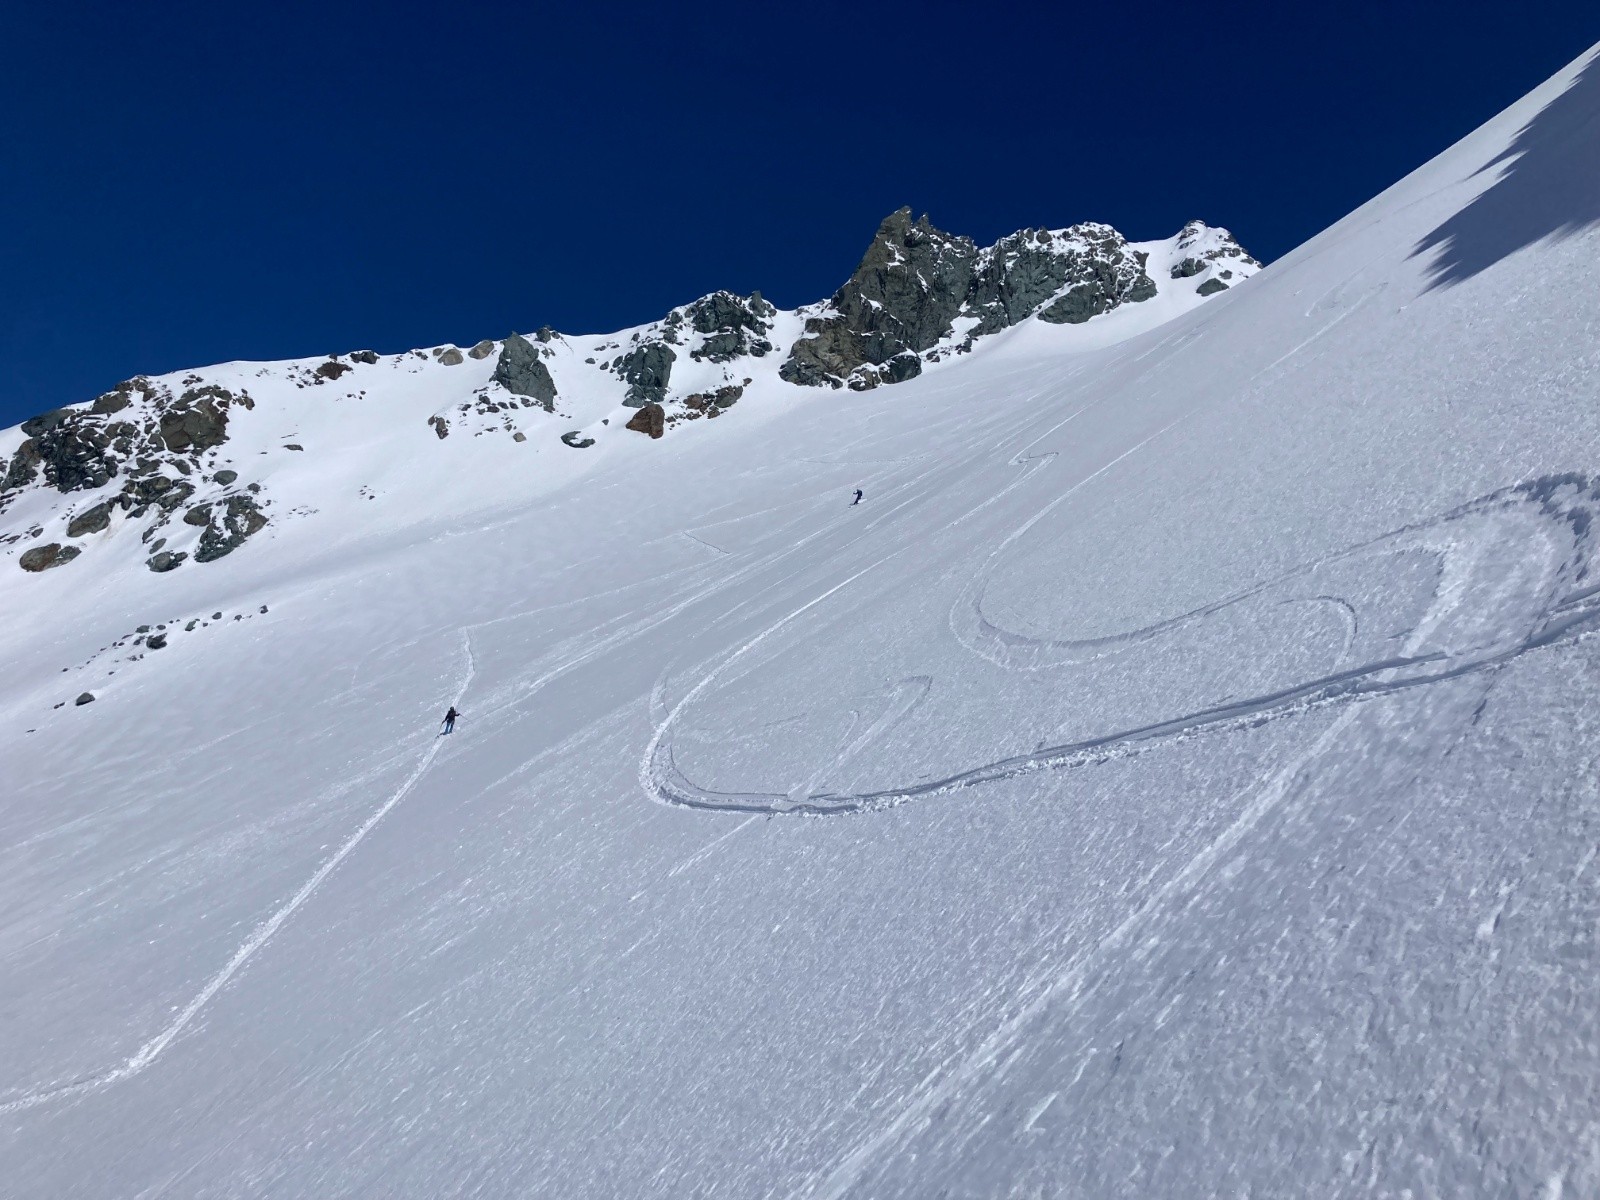  Très bon ski sous le col des Roches